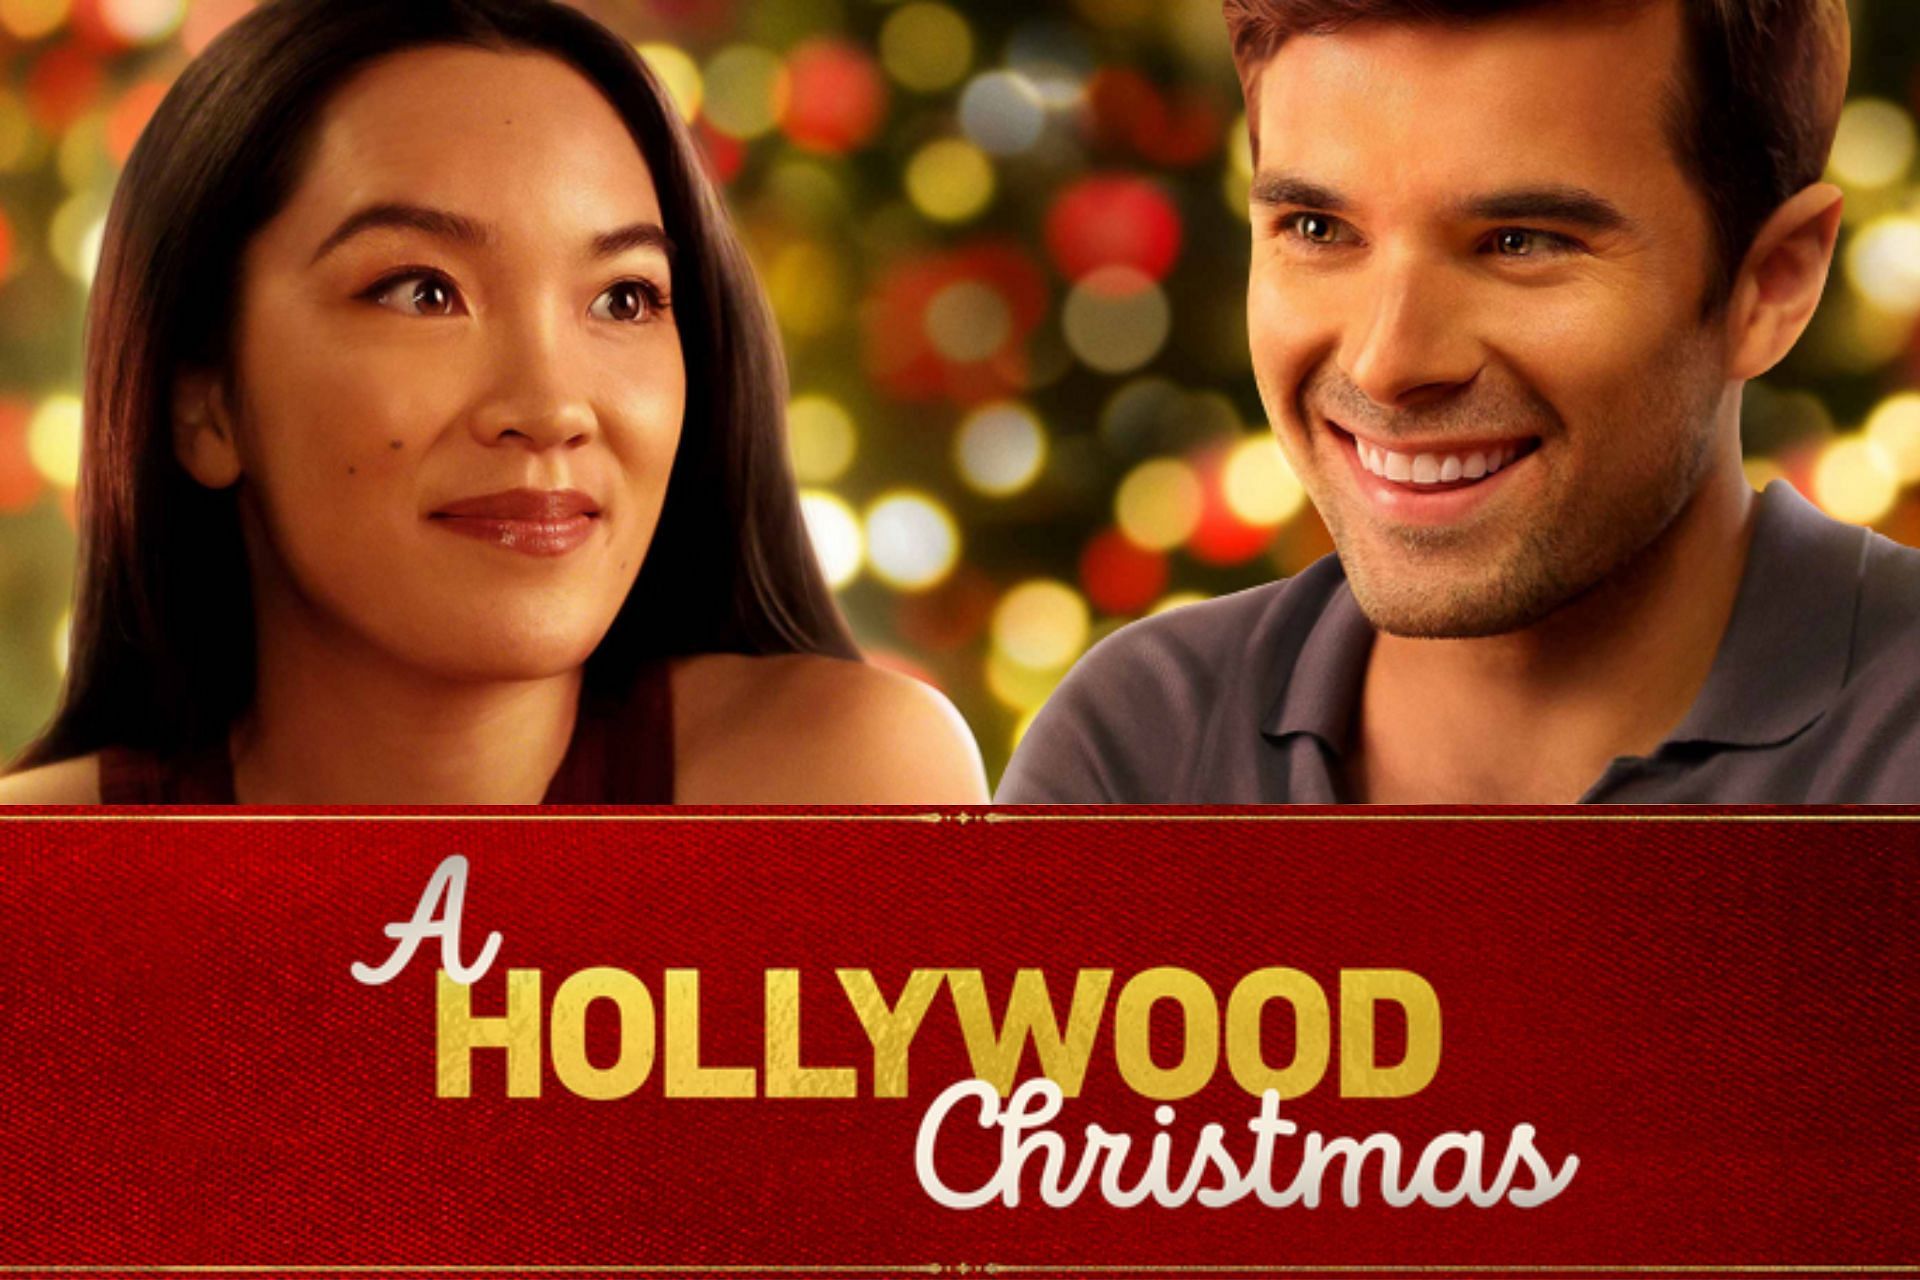 A Hollywood Christmas cast list Jessika Van, Josh Swickard, and others